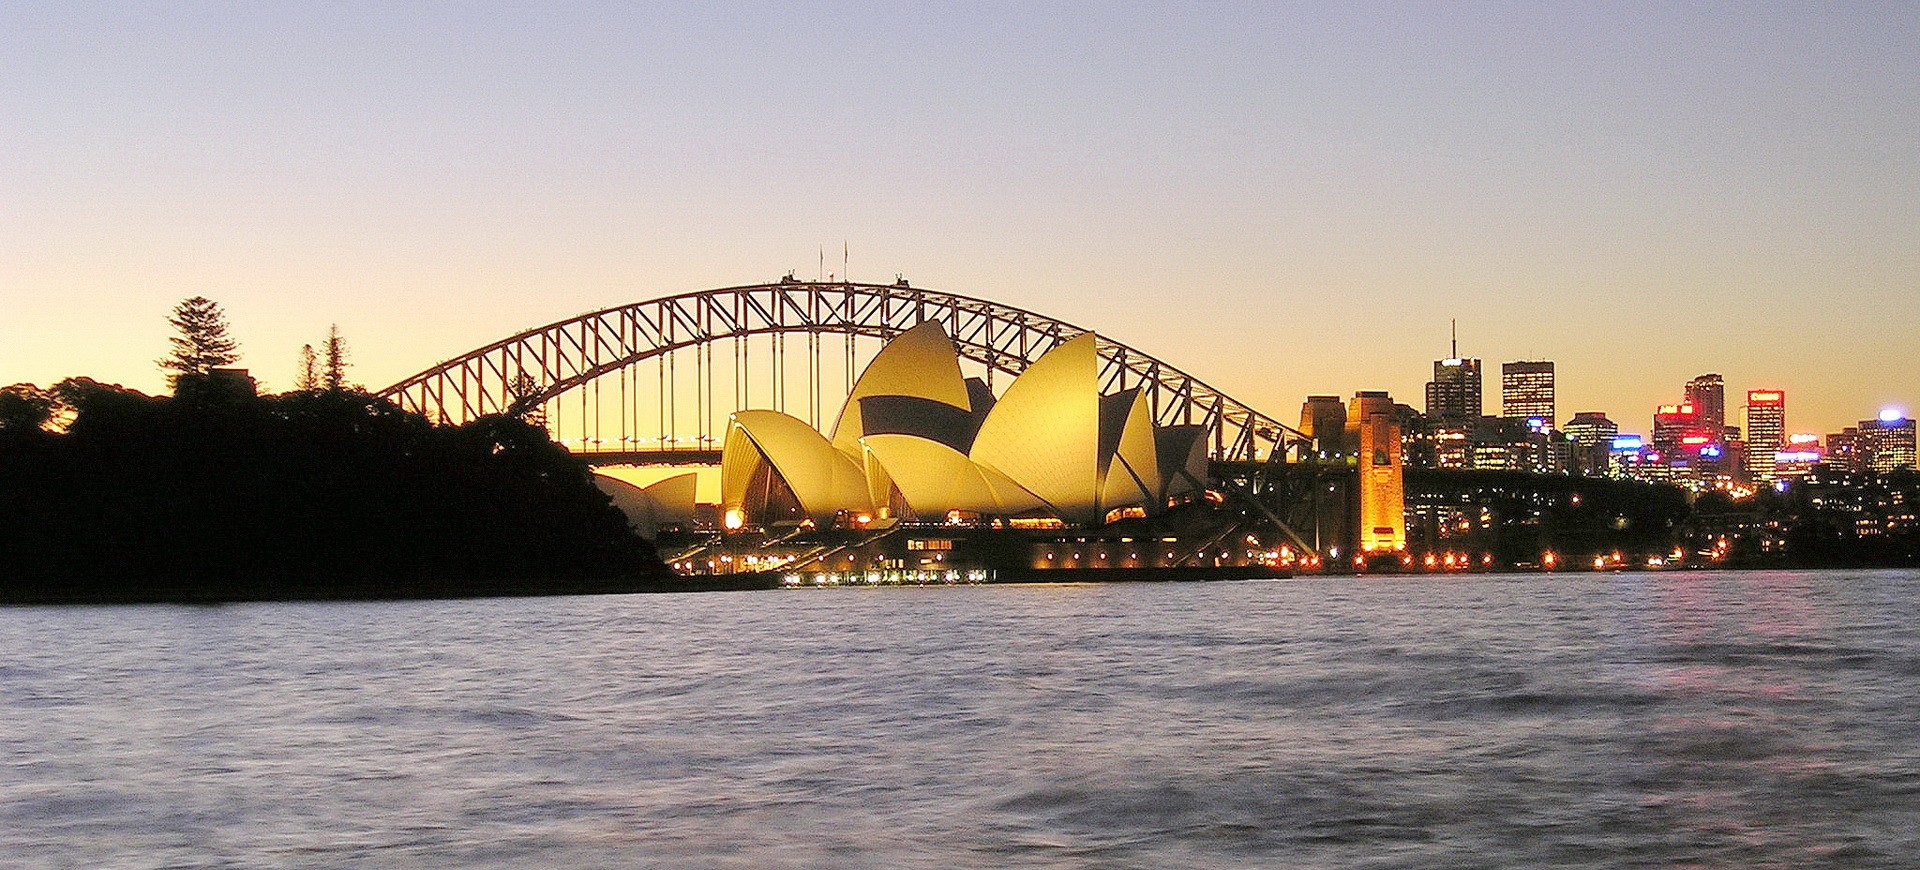 Australie Sydney Bridge